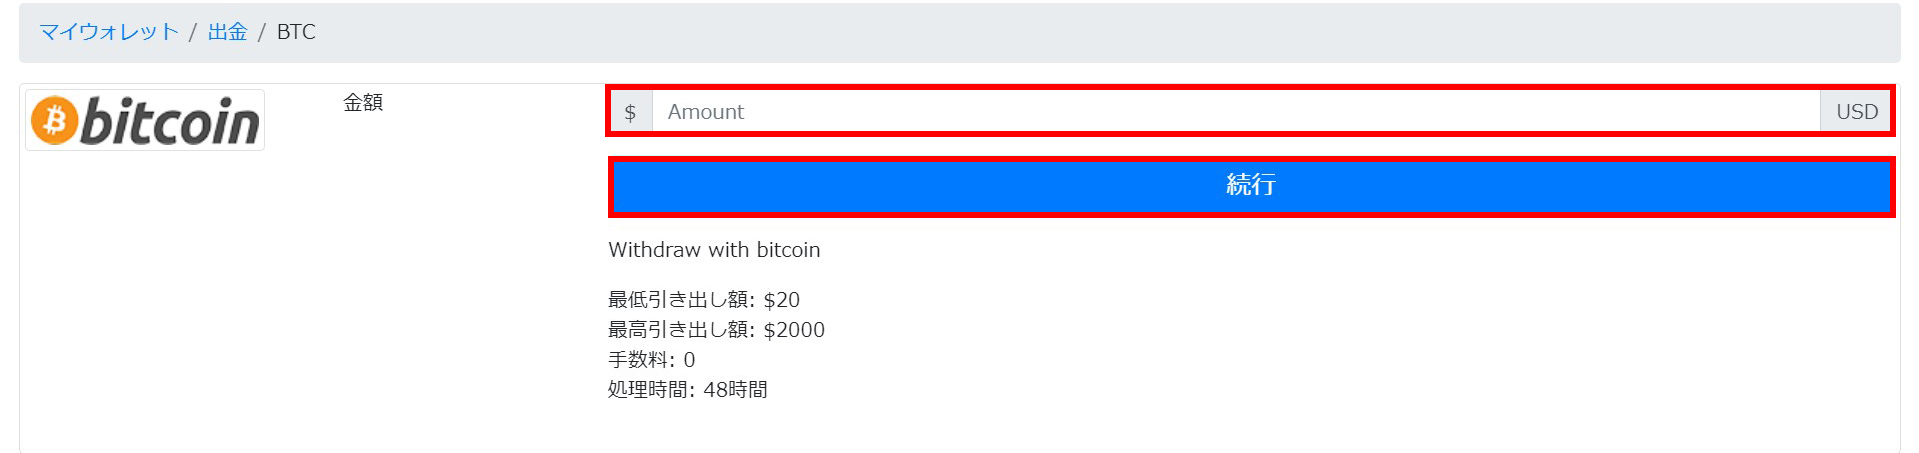 bitcoin出金額入力